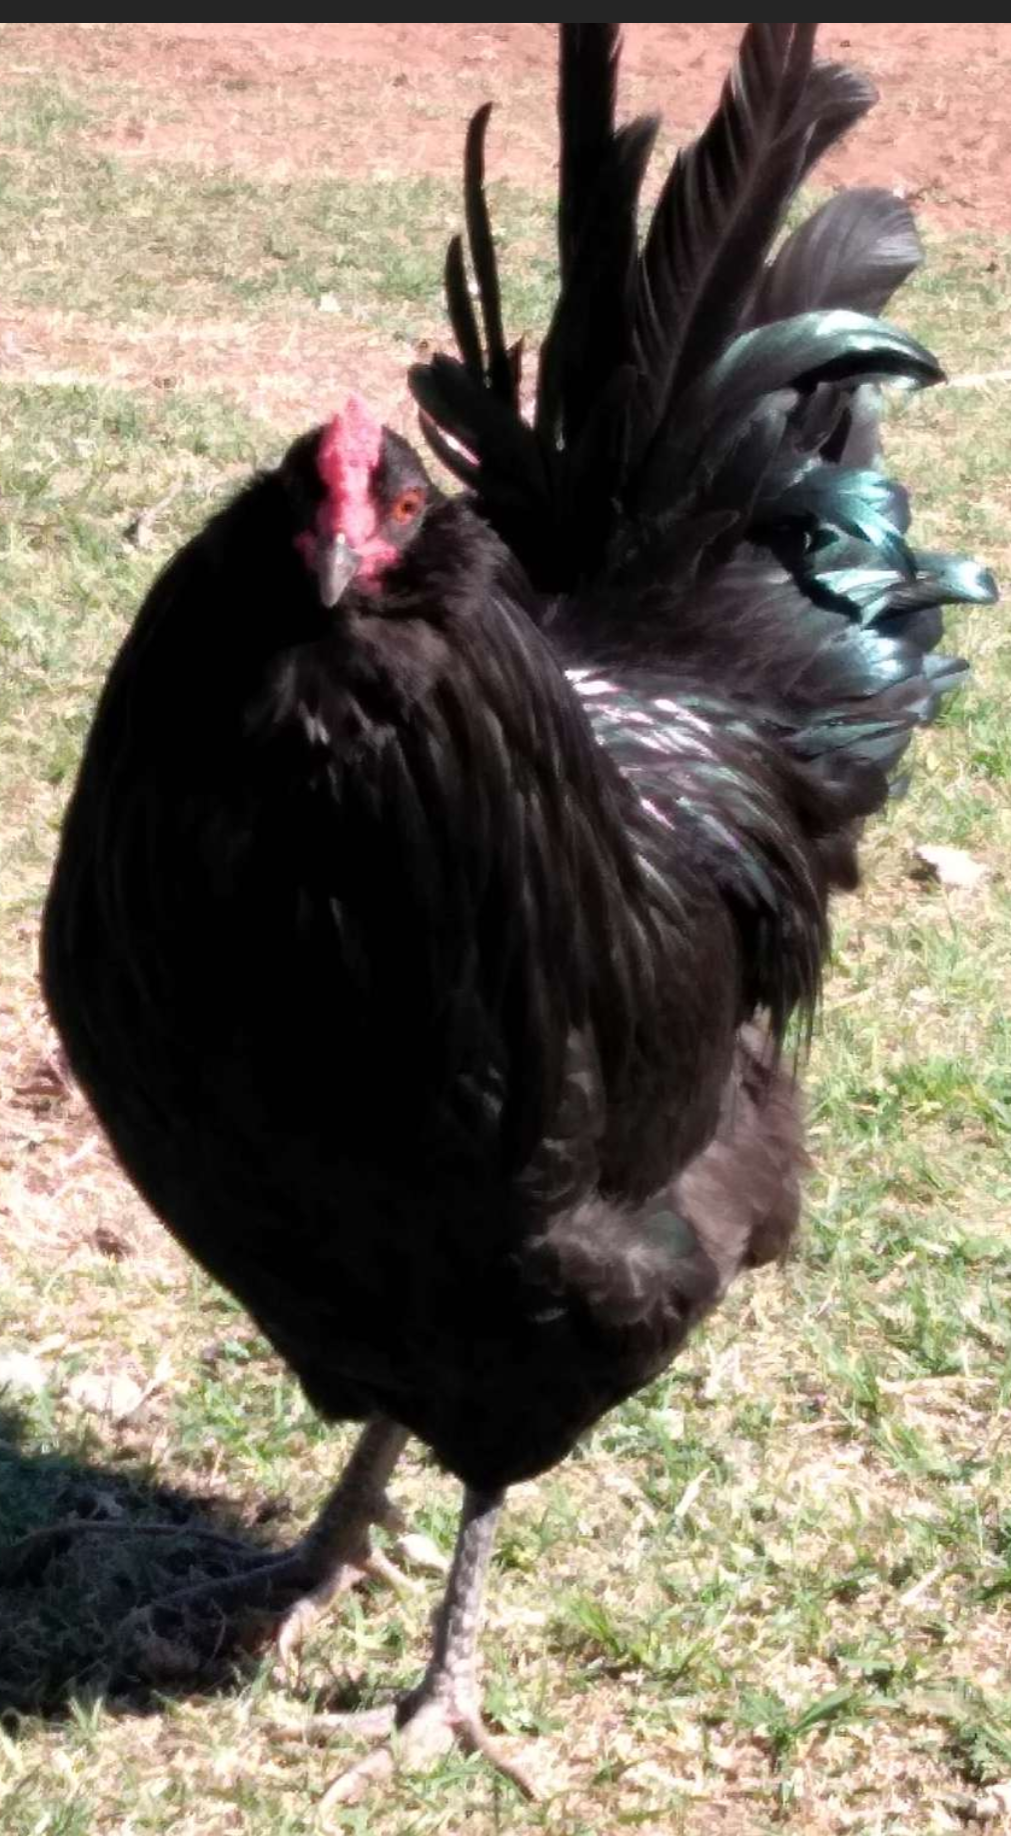 Black Ameraucana rooster standing in a yard